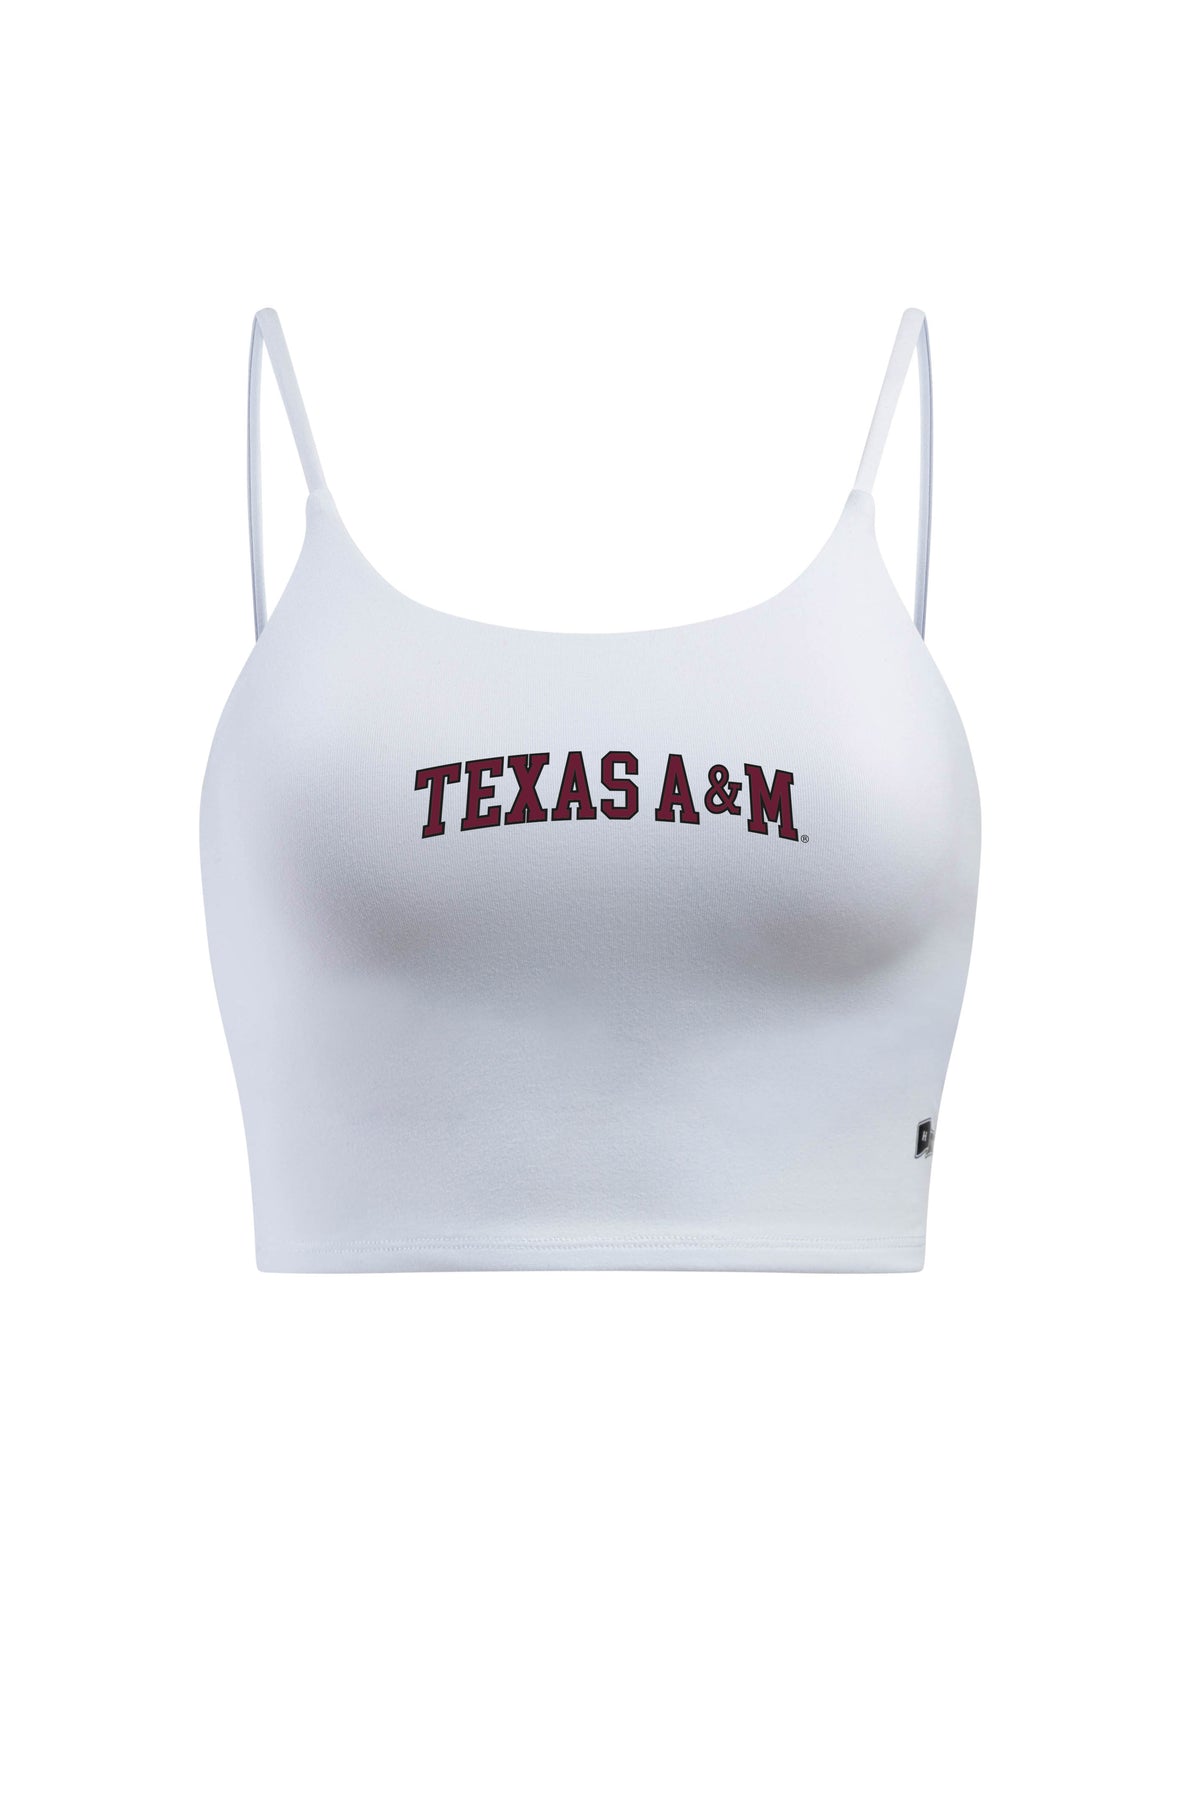 Texas A&M University Bra Tank Top